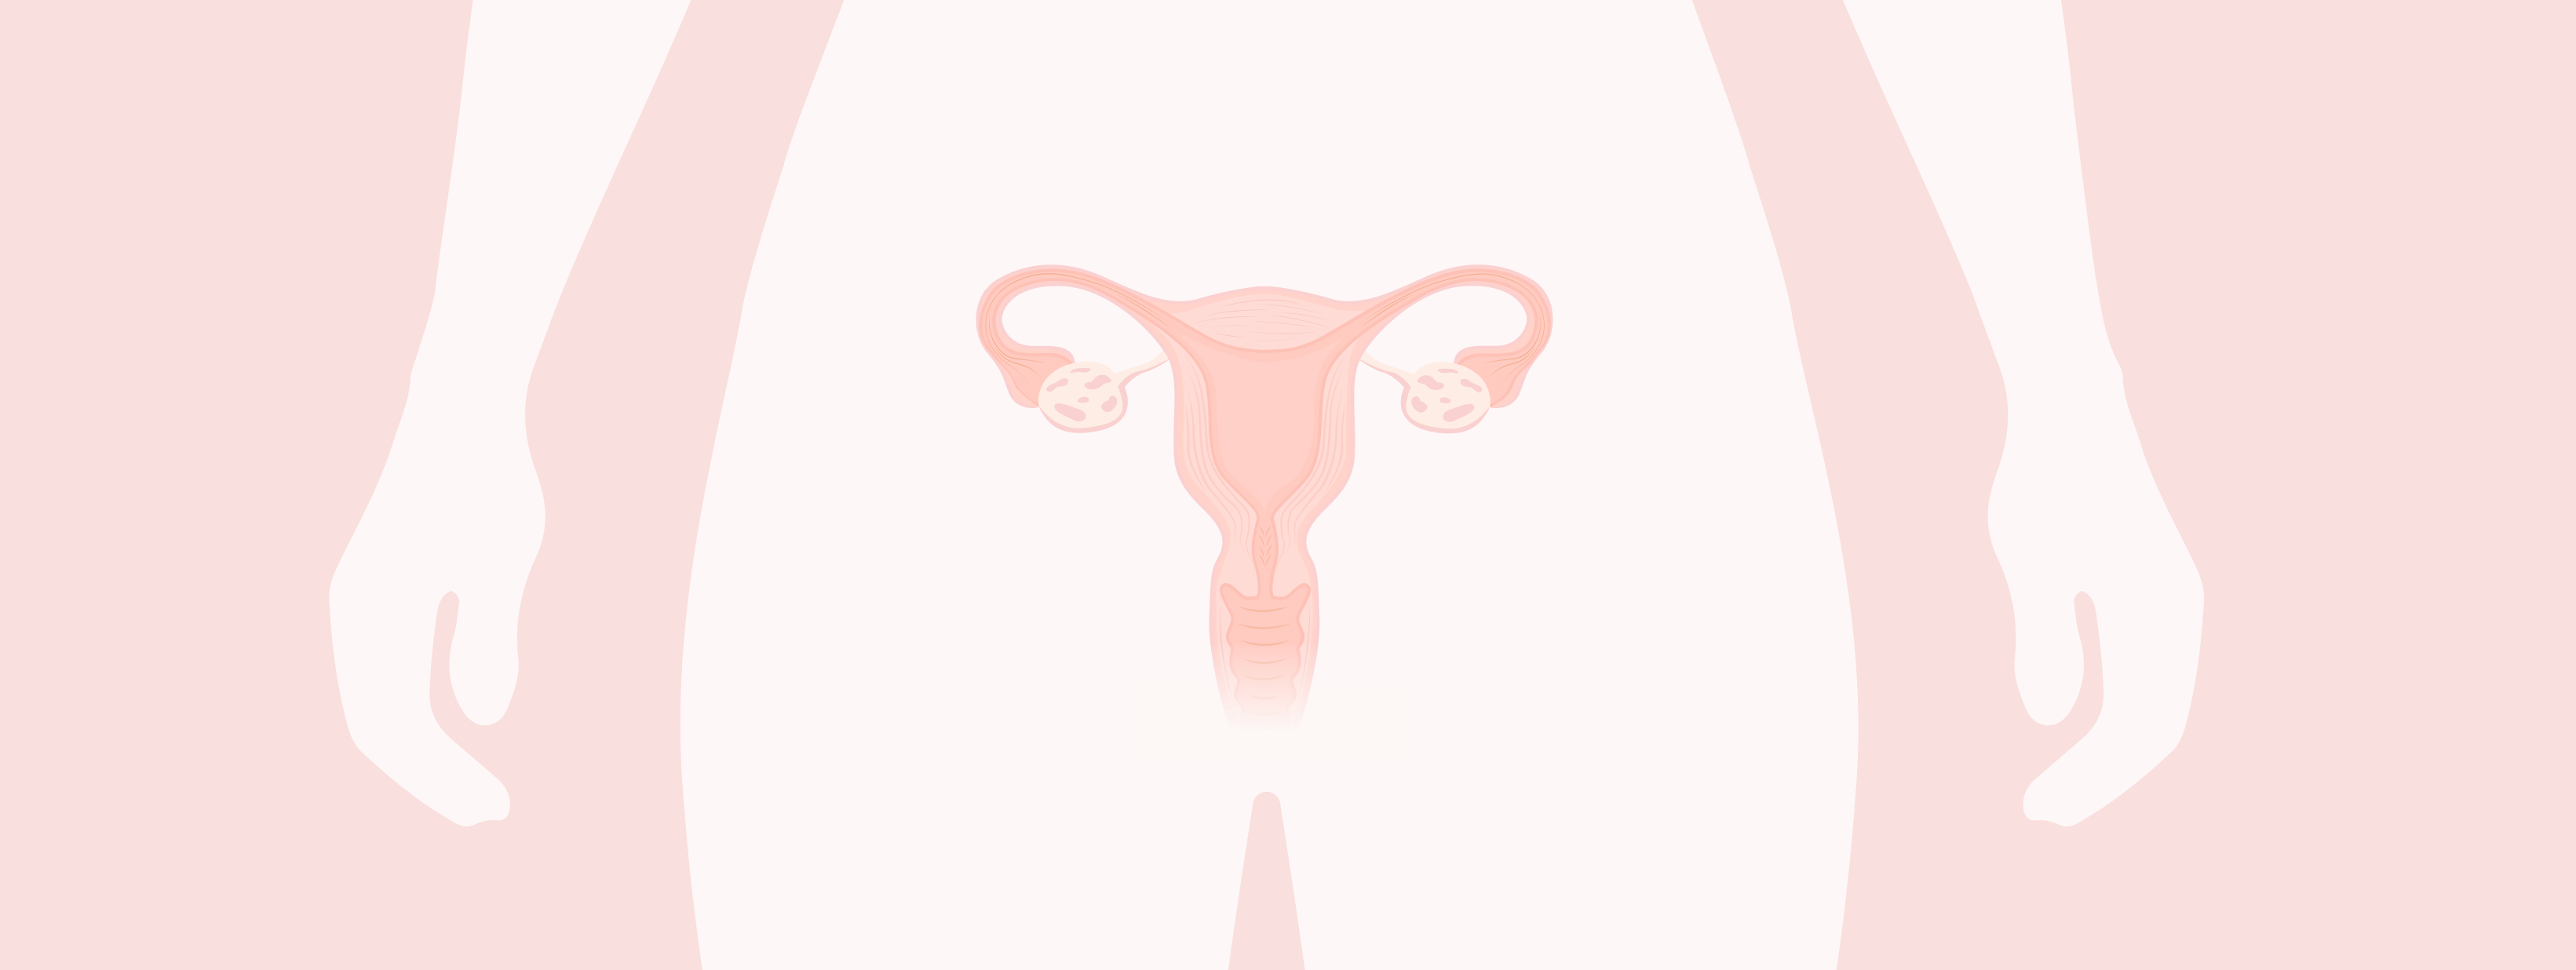 Illustration d'utérus